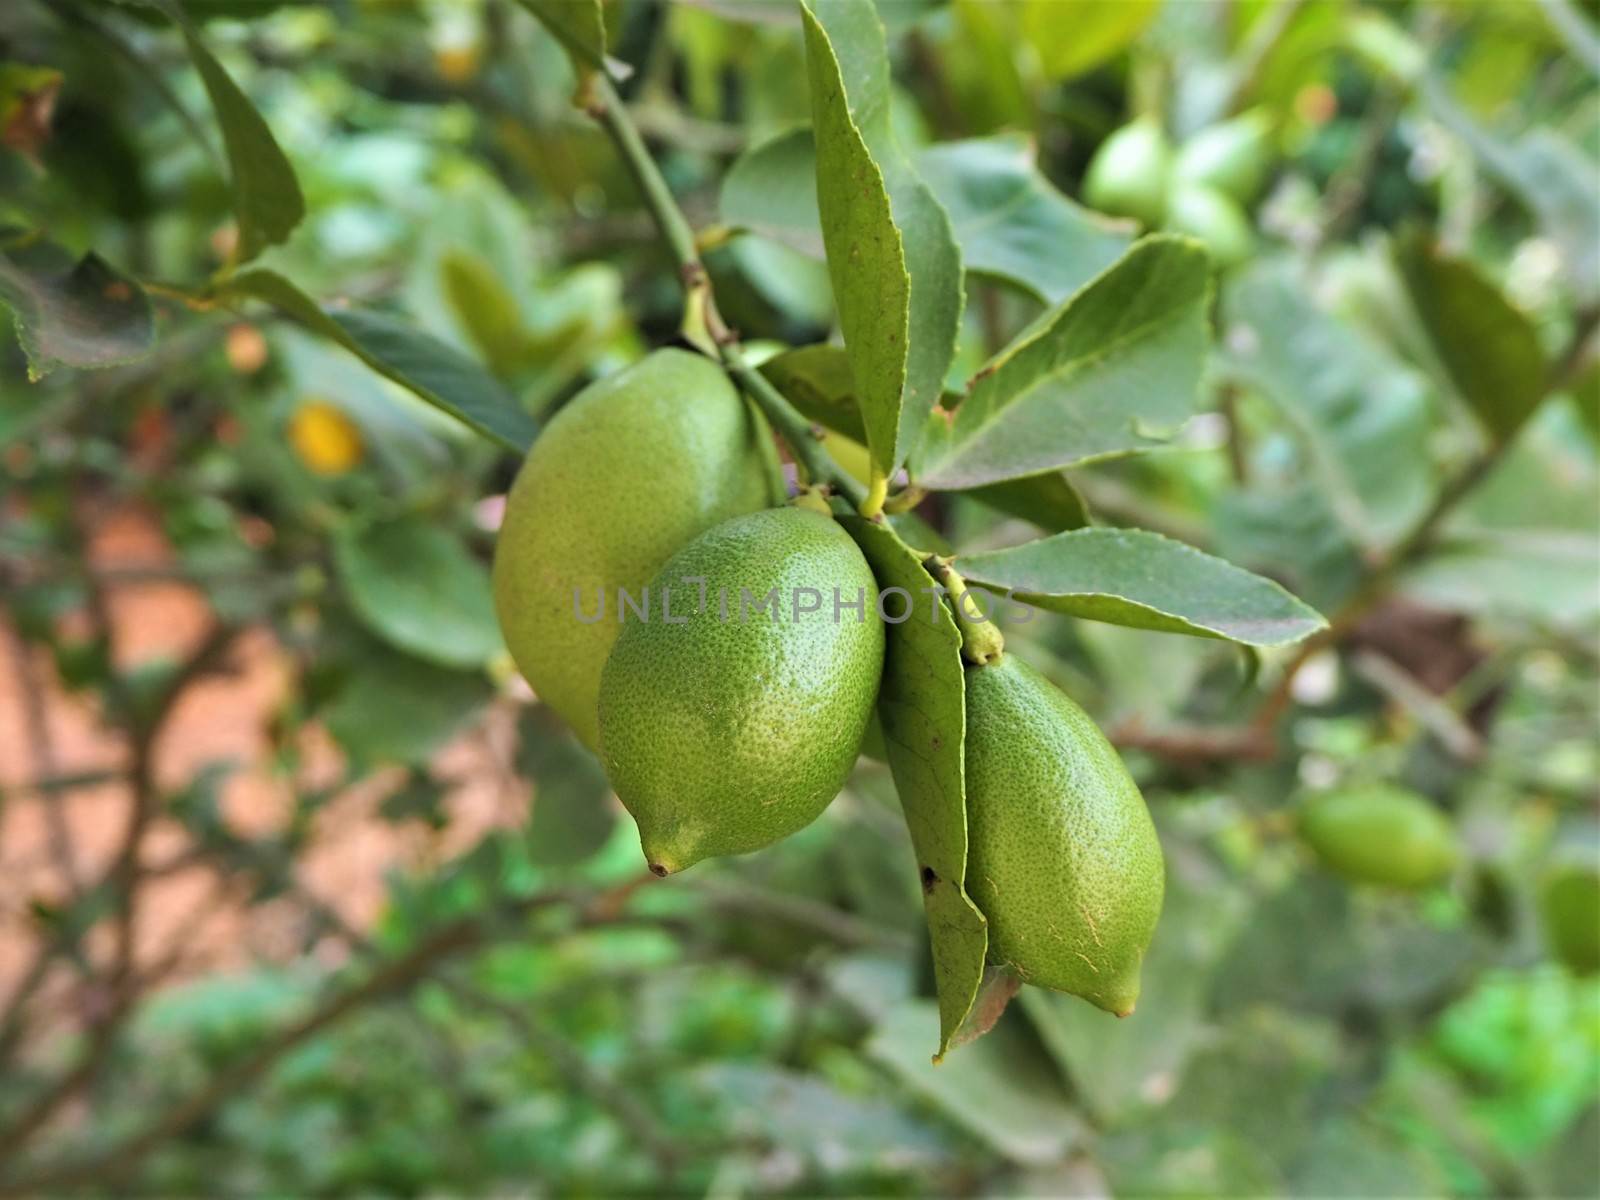 Lemons or limes growing on a tree